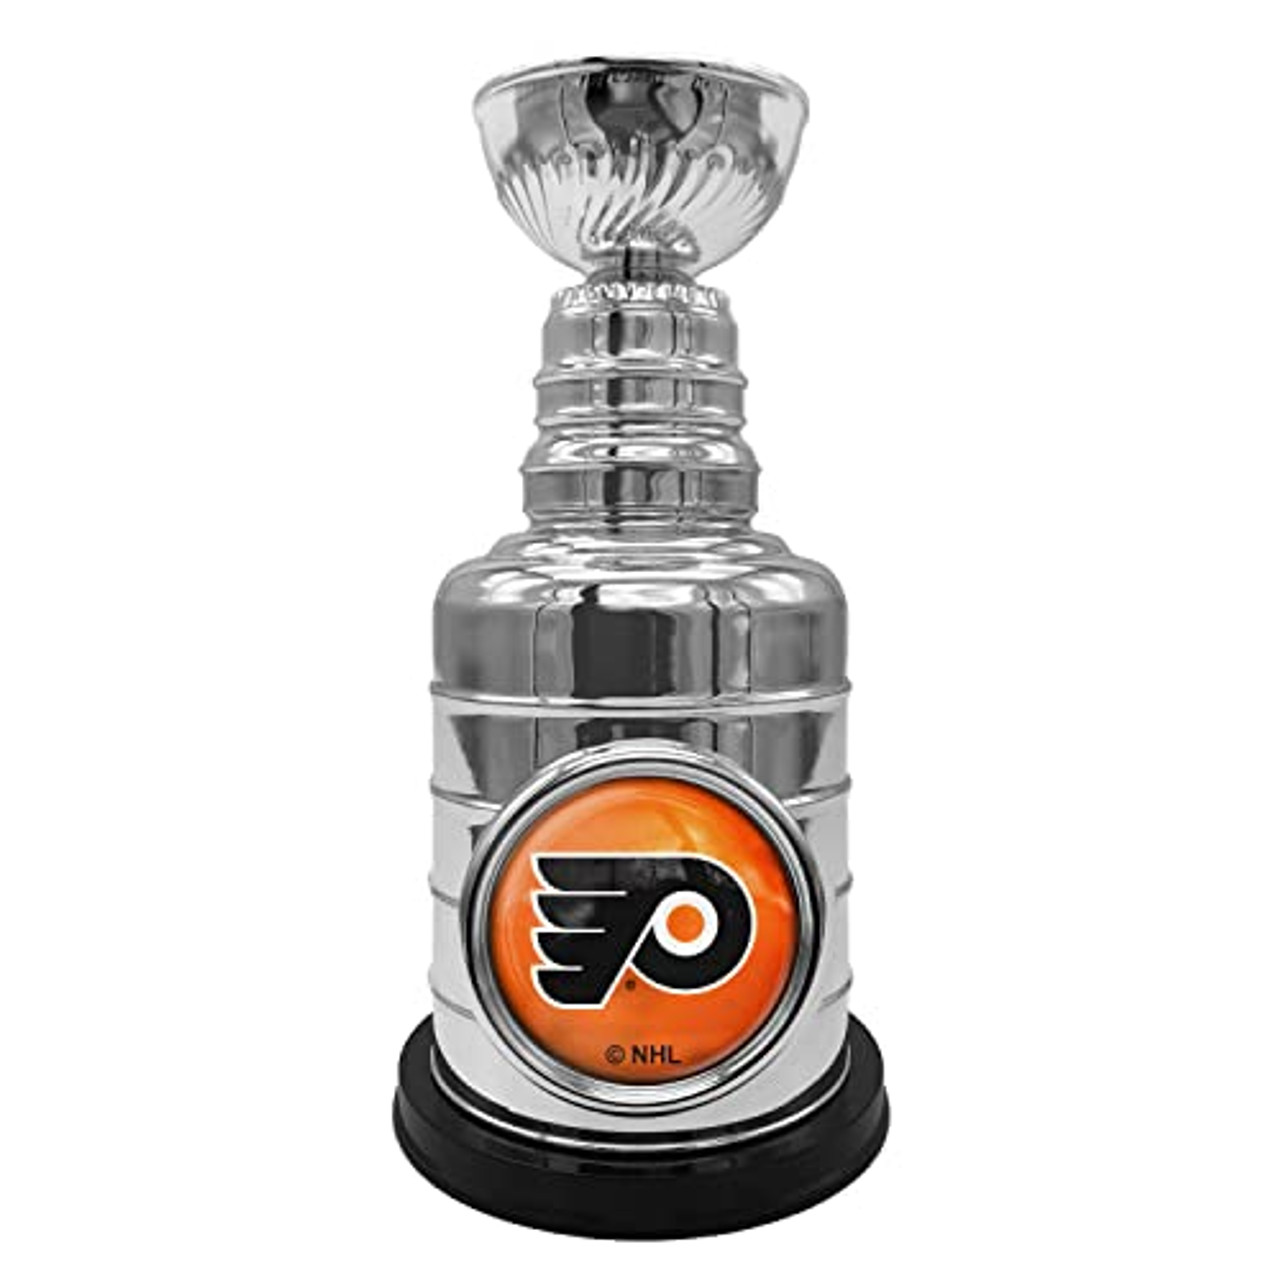 Philadelphia Flyers NHL Mini 3 Stanley Cup Champions Replica Trophy